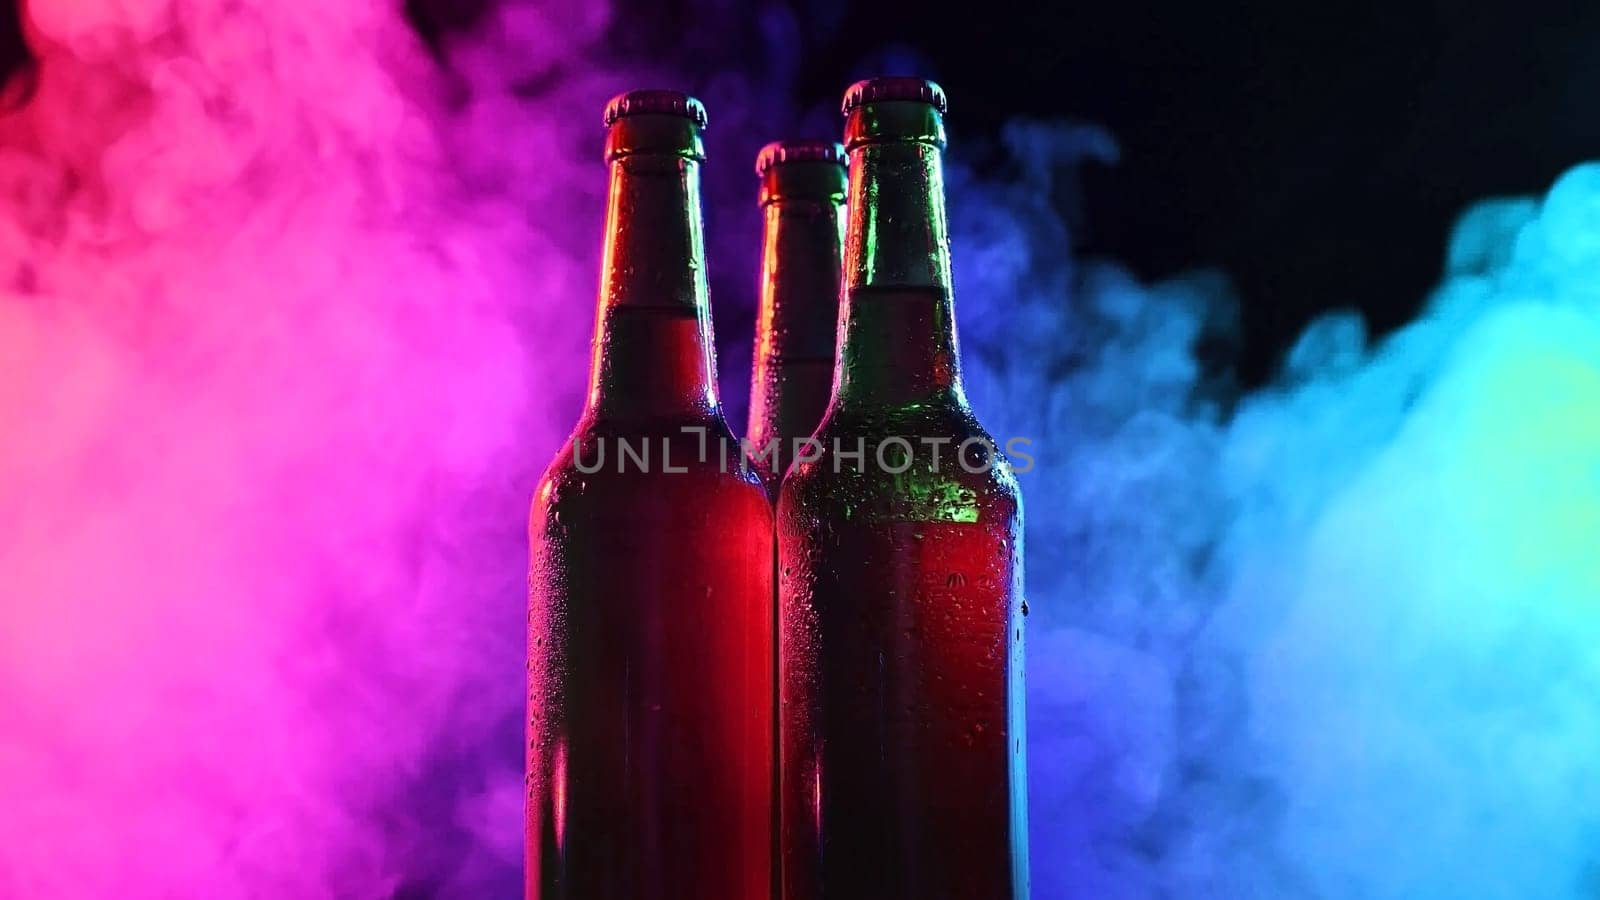 Three bottles of beer spinning in blue pink fog